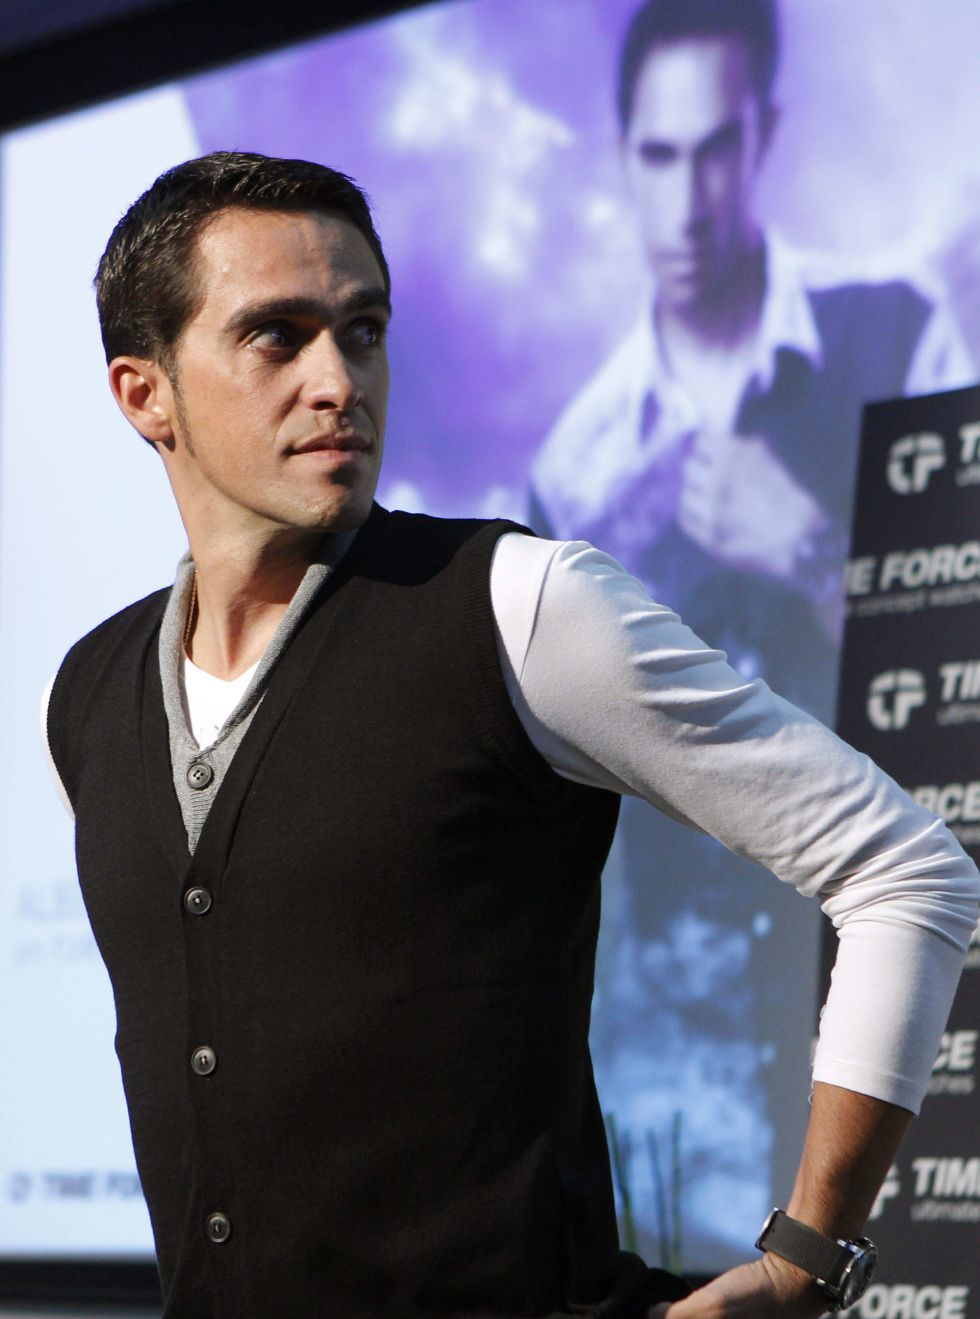 Contador: "No tengo ningún problema en acudir a declarar"